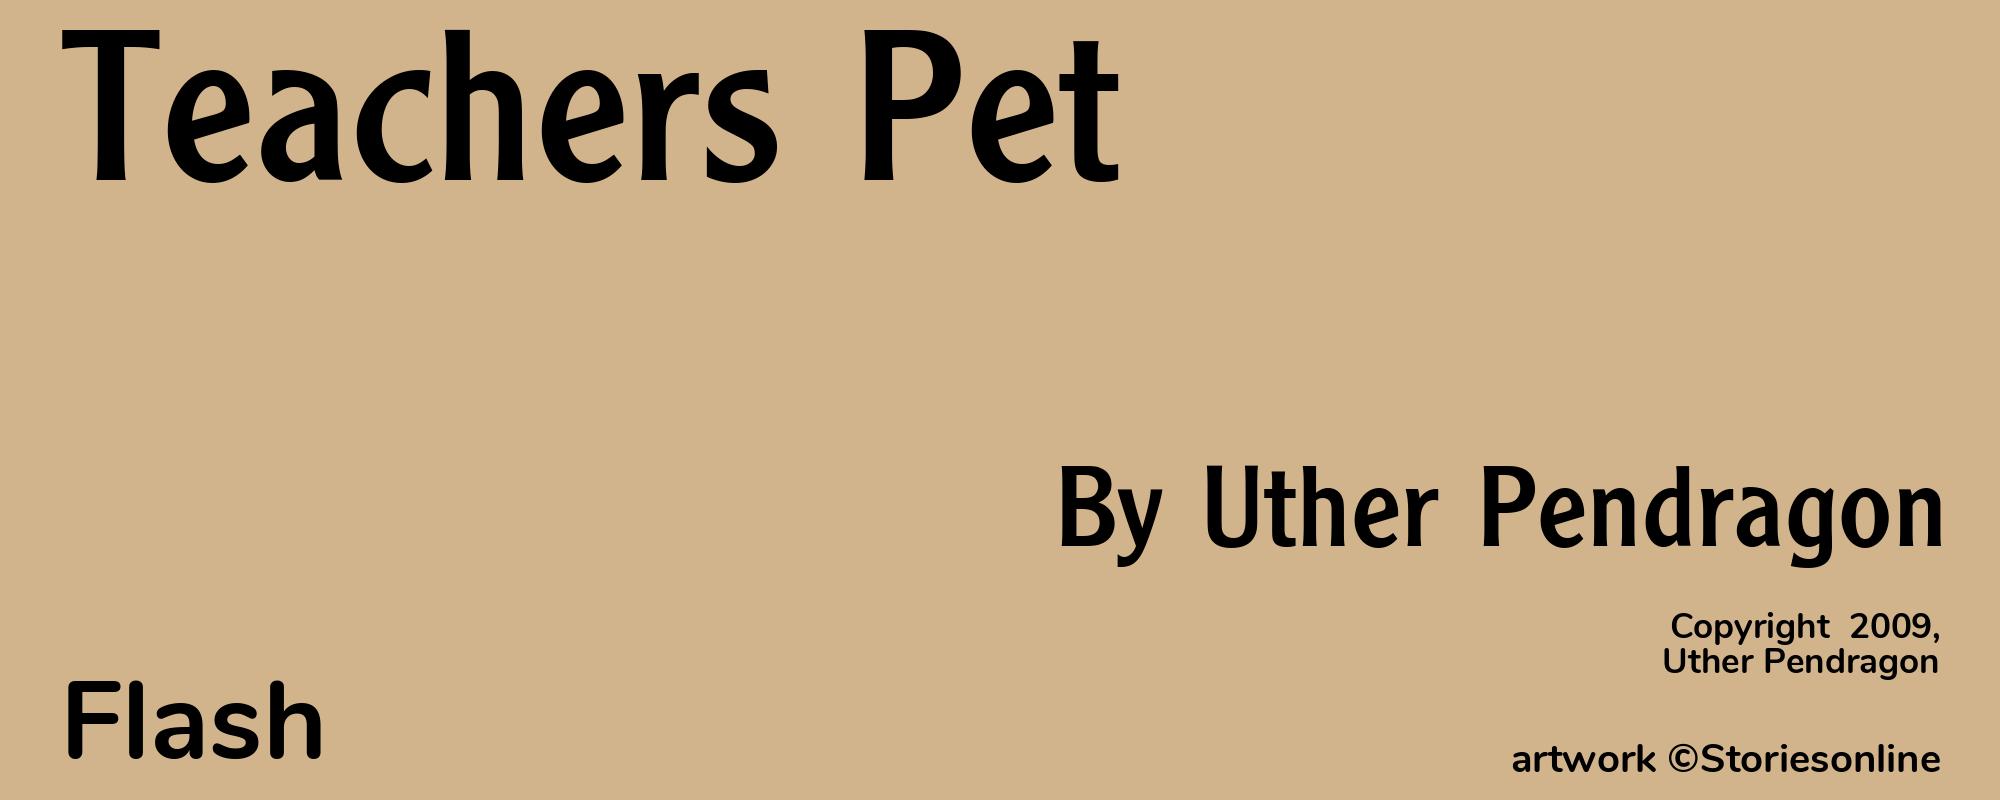 Teachers Pet - Cover